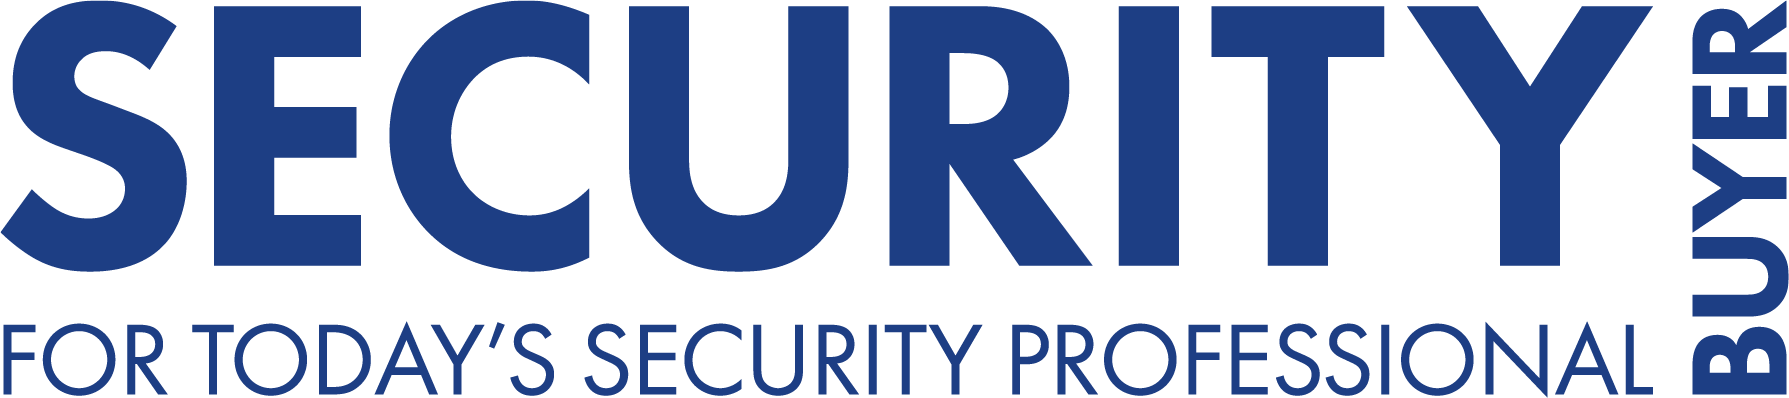 International-Security-Buyer-logo.png